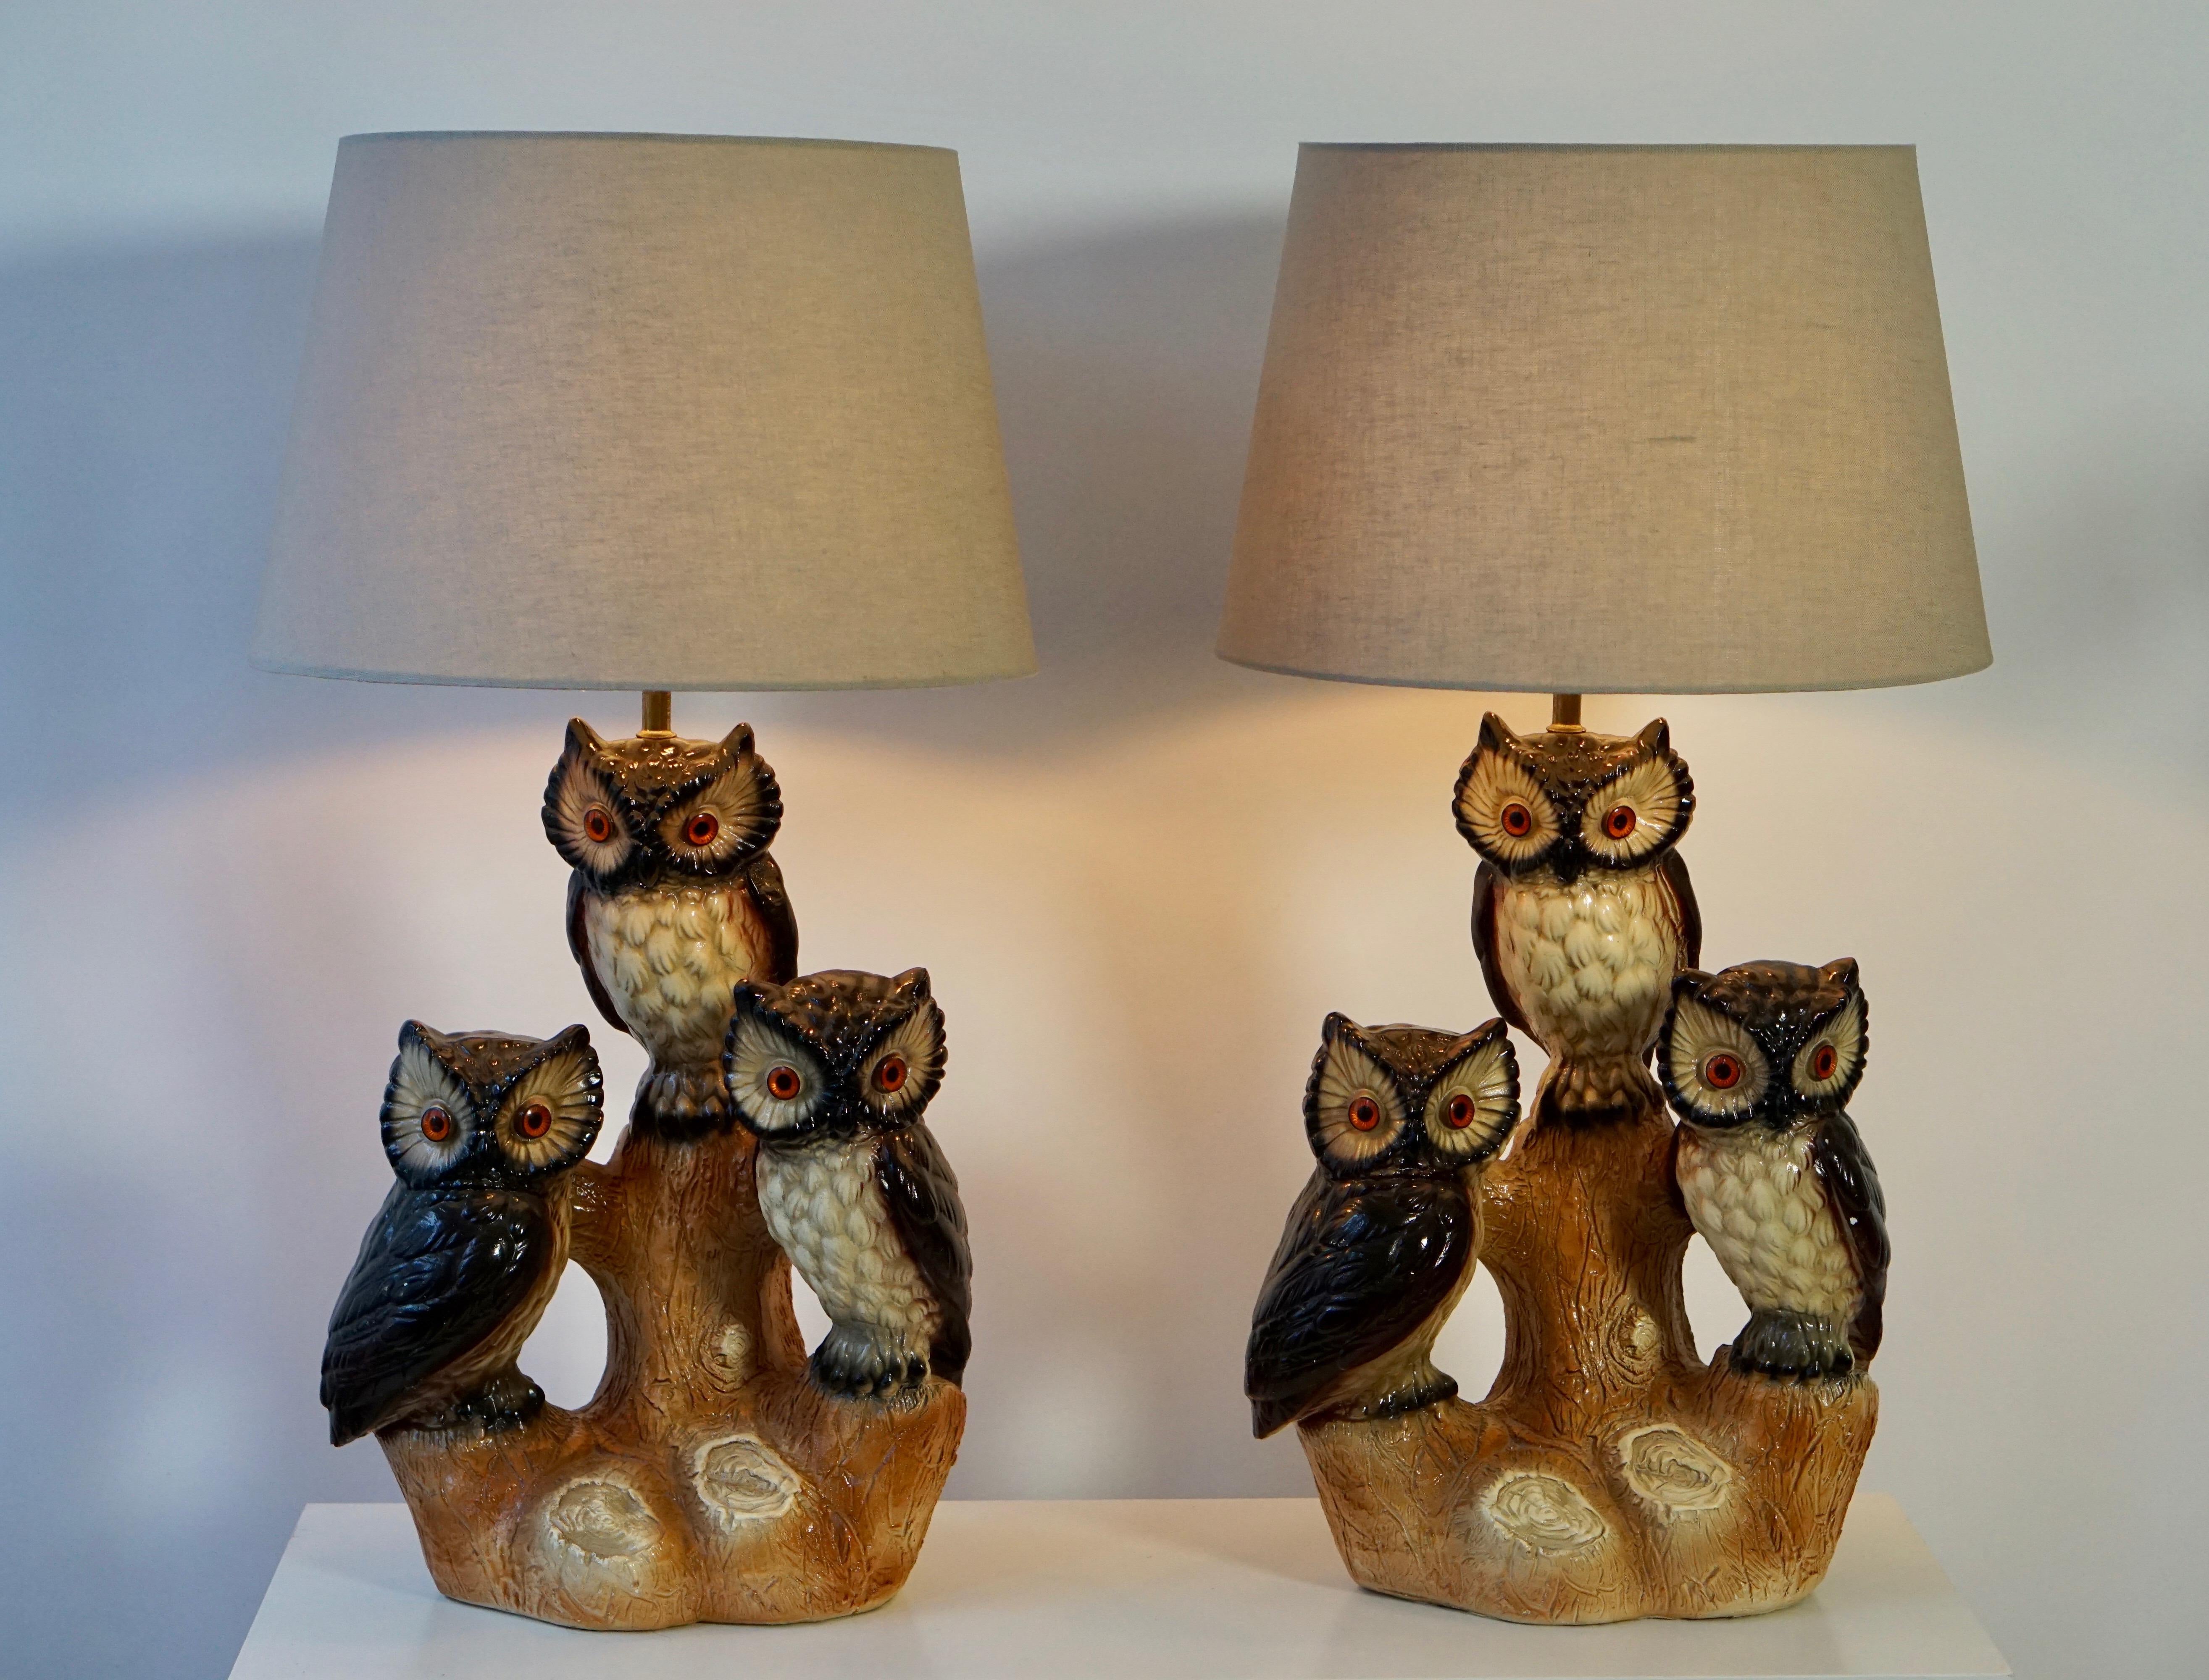 Italian Mid-Century Modern Sculptural Ceramic Owl Lamps, 1970s For Sale